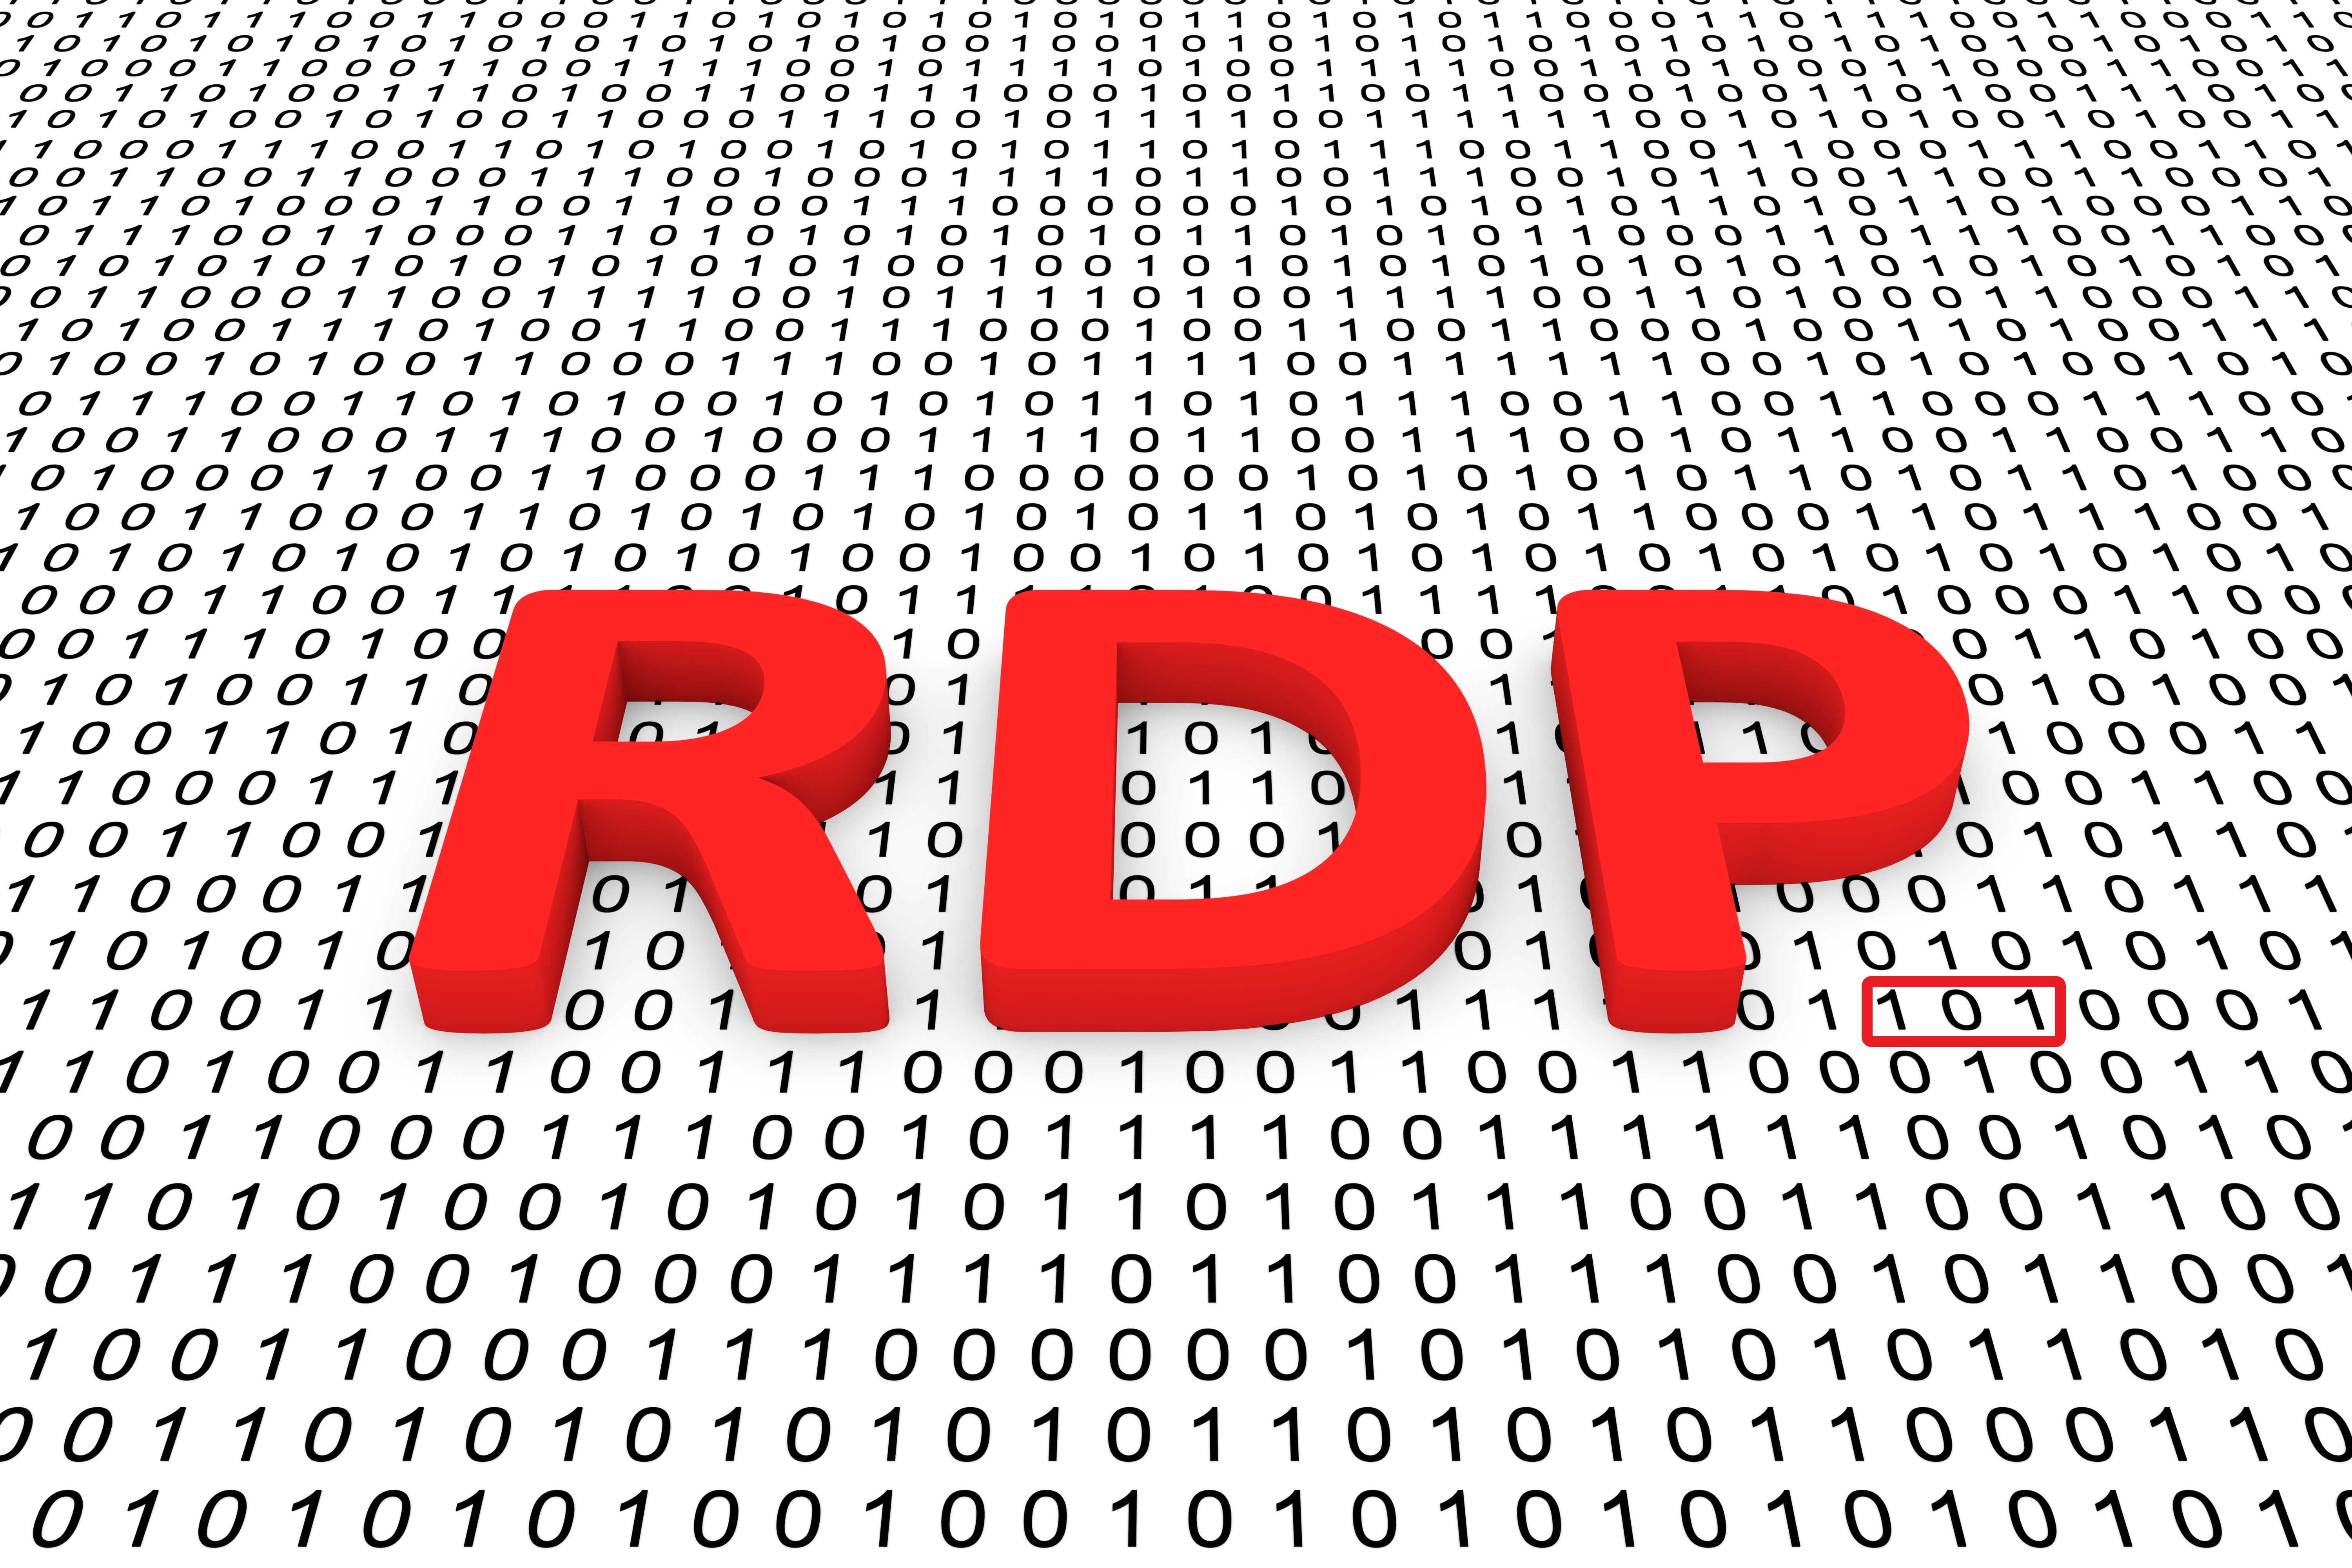 Remote Desktop Protocol: Executing the External RDP Query